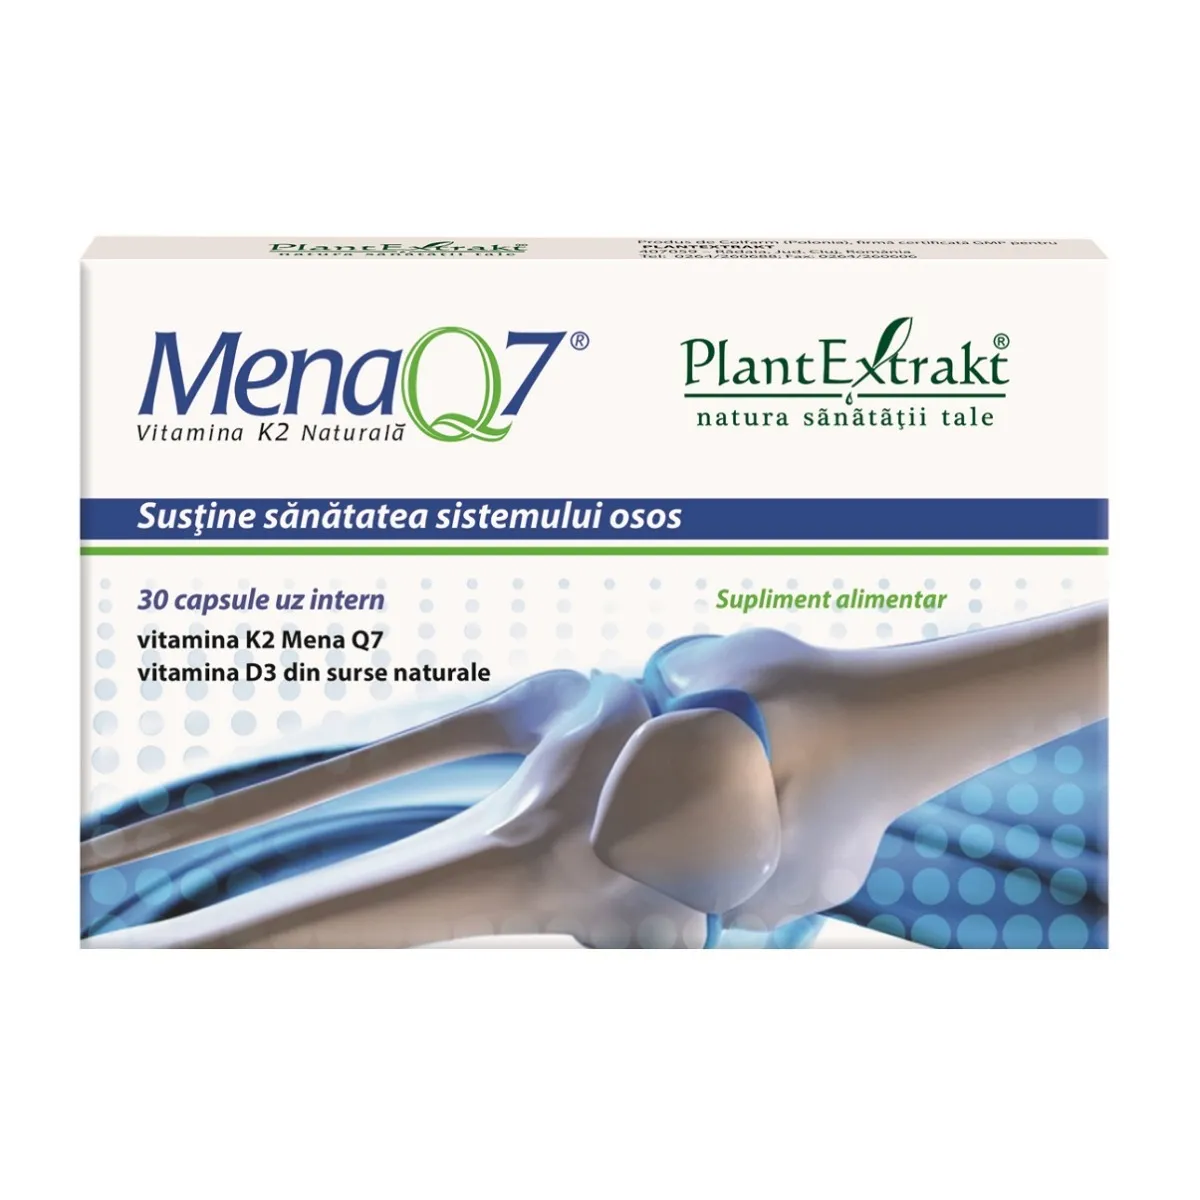 Mena Q7 vitamina K2 naturala, 30 capsule, Plant Extrakt